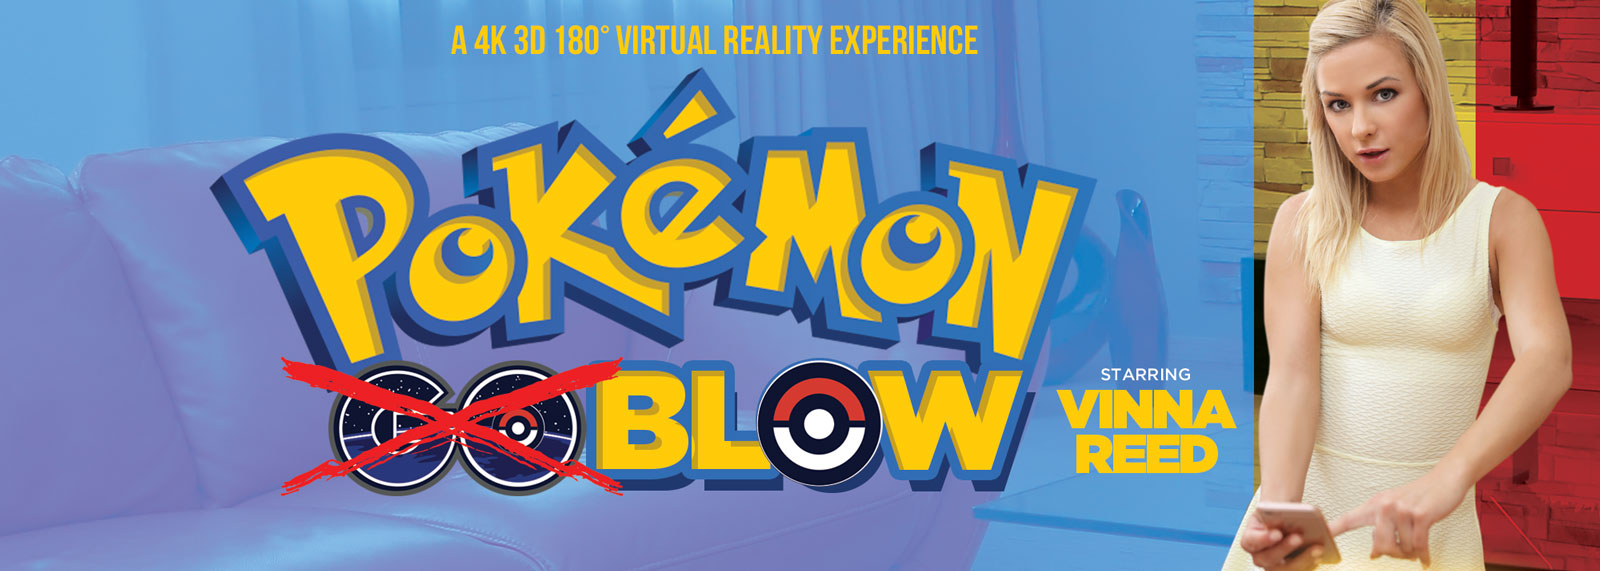 Pokemon Blow - VR Porn Video, Starring: Vinna Reed